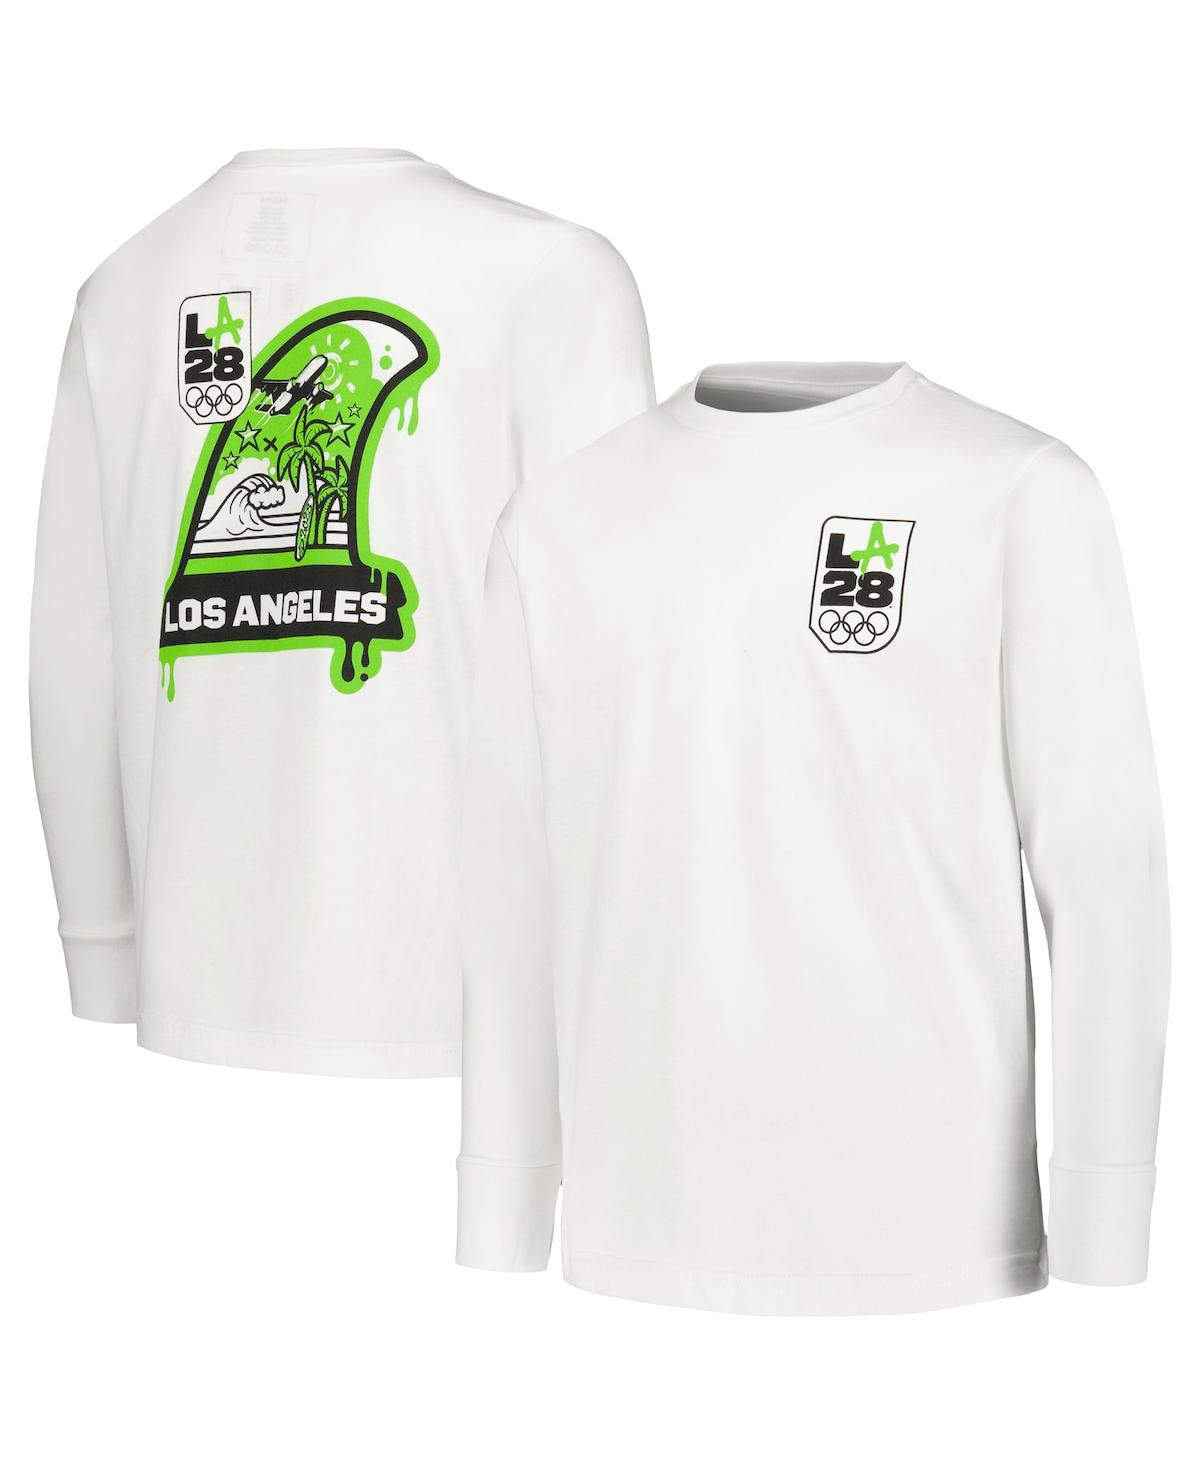 Outerstuff Kids' Big Boys White La28 Summer Olympics Long Sleeve T-shirt